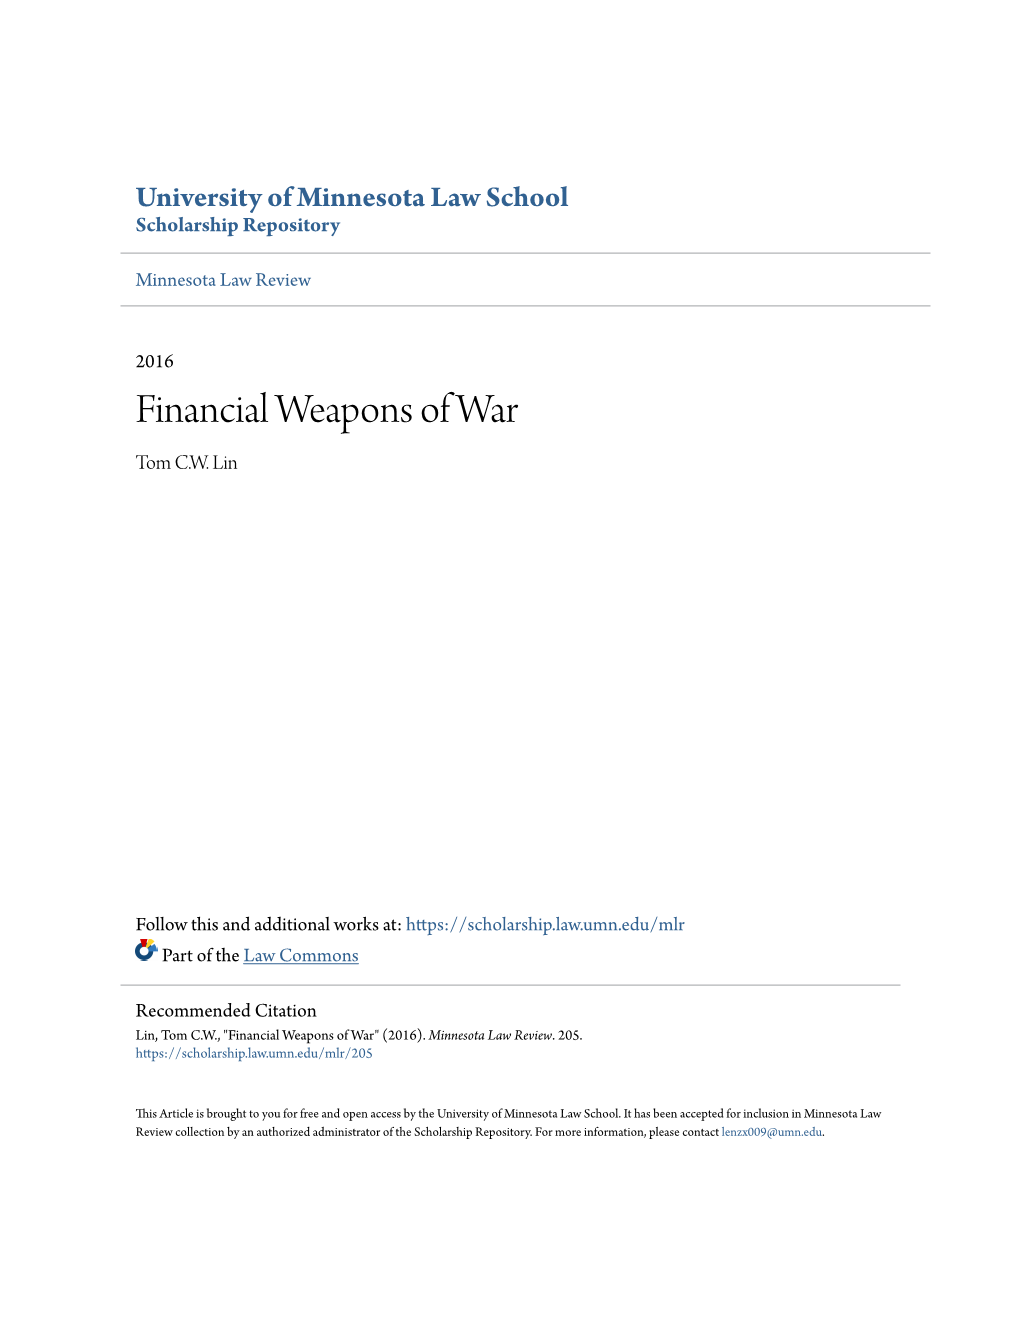 Financial Weapons of War Tom C.W